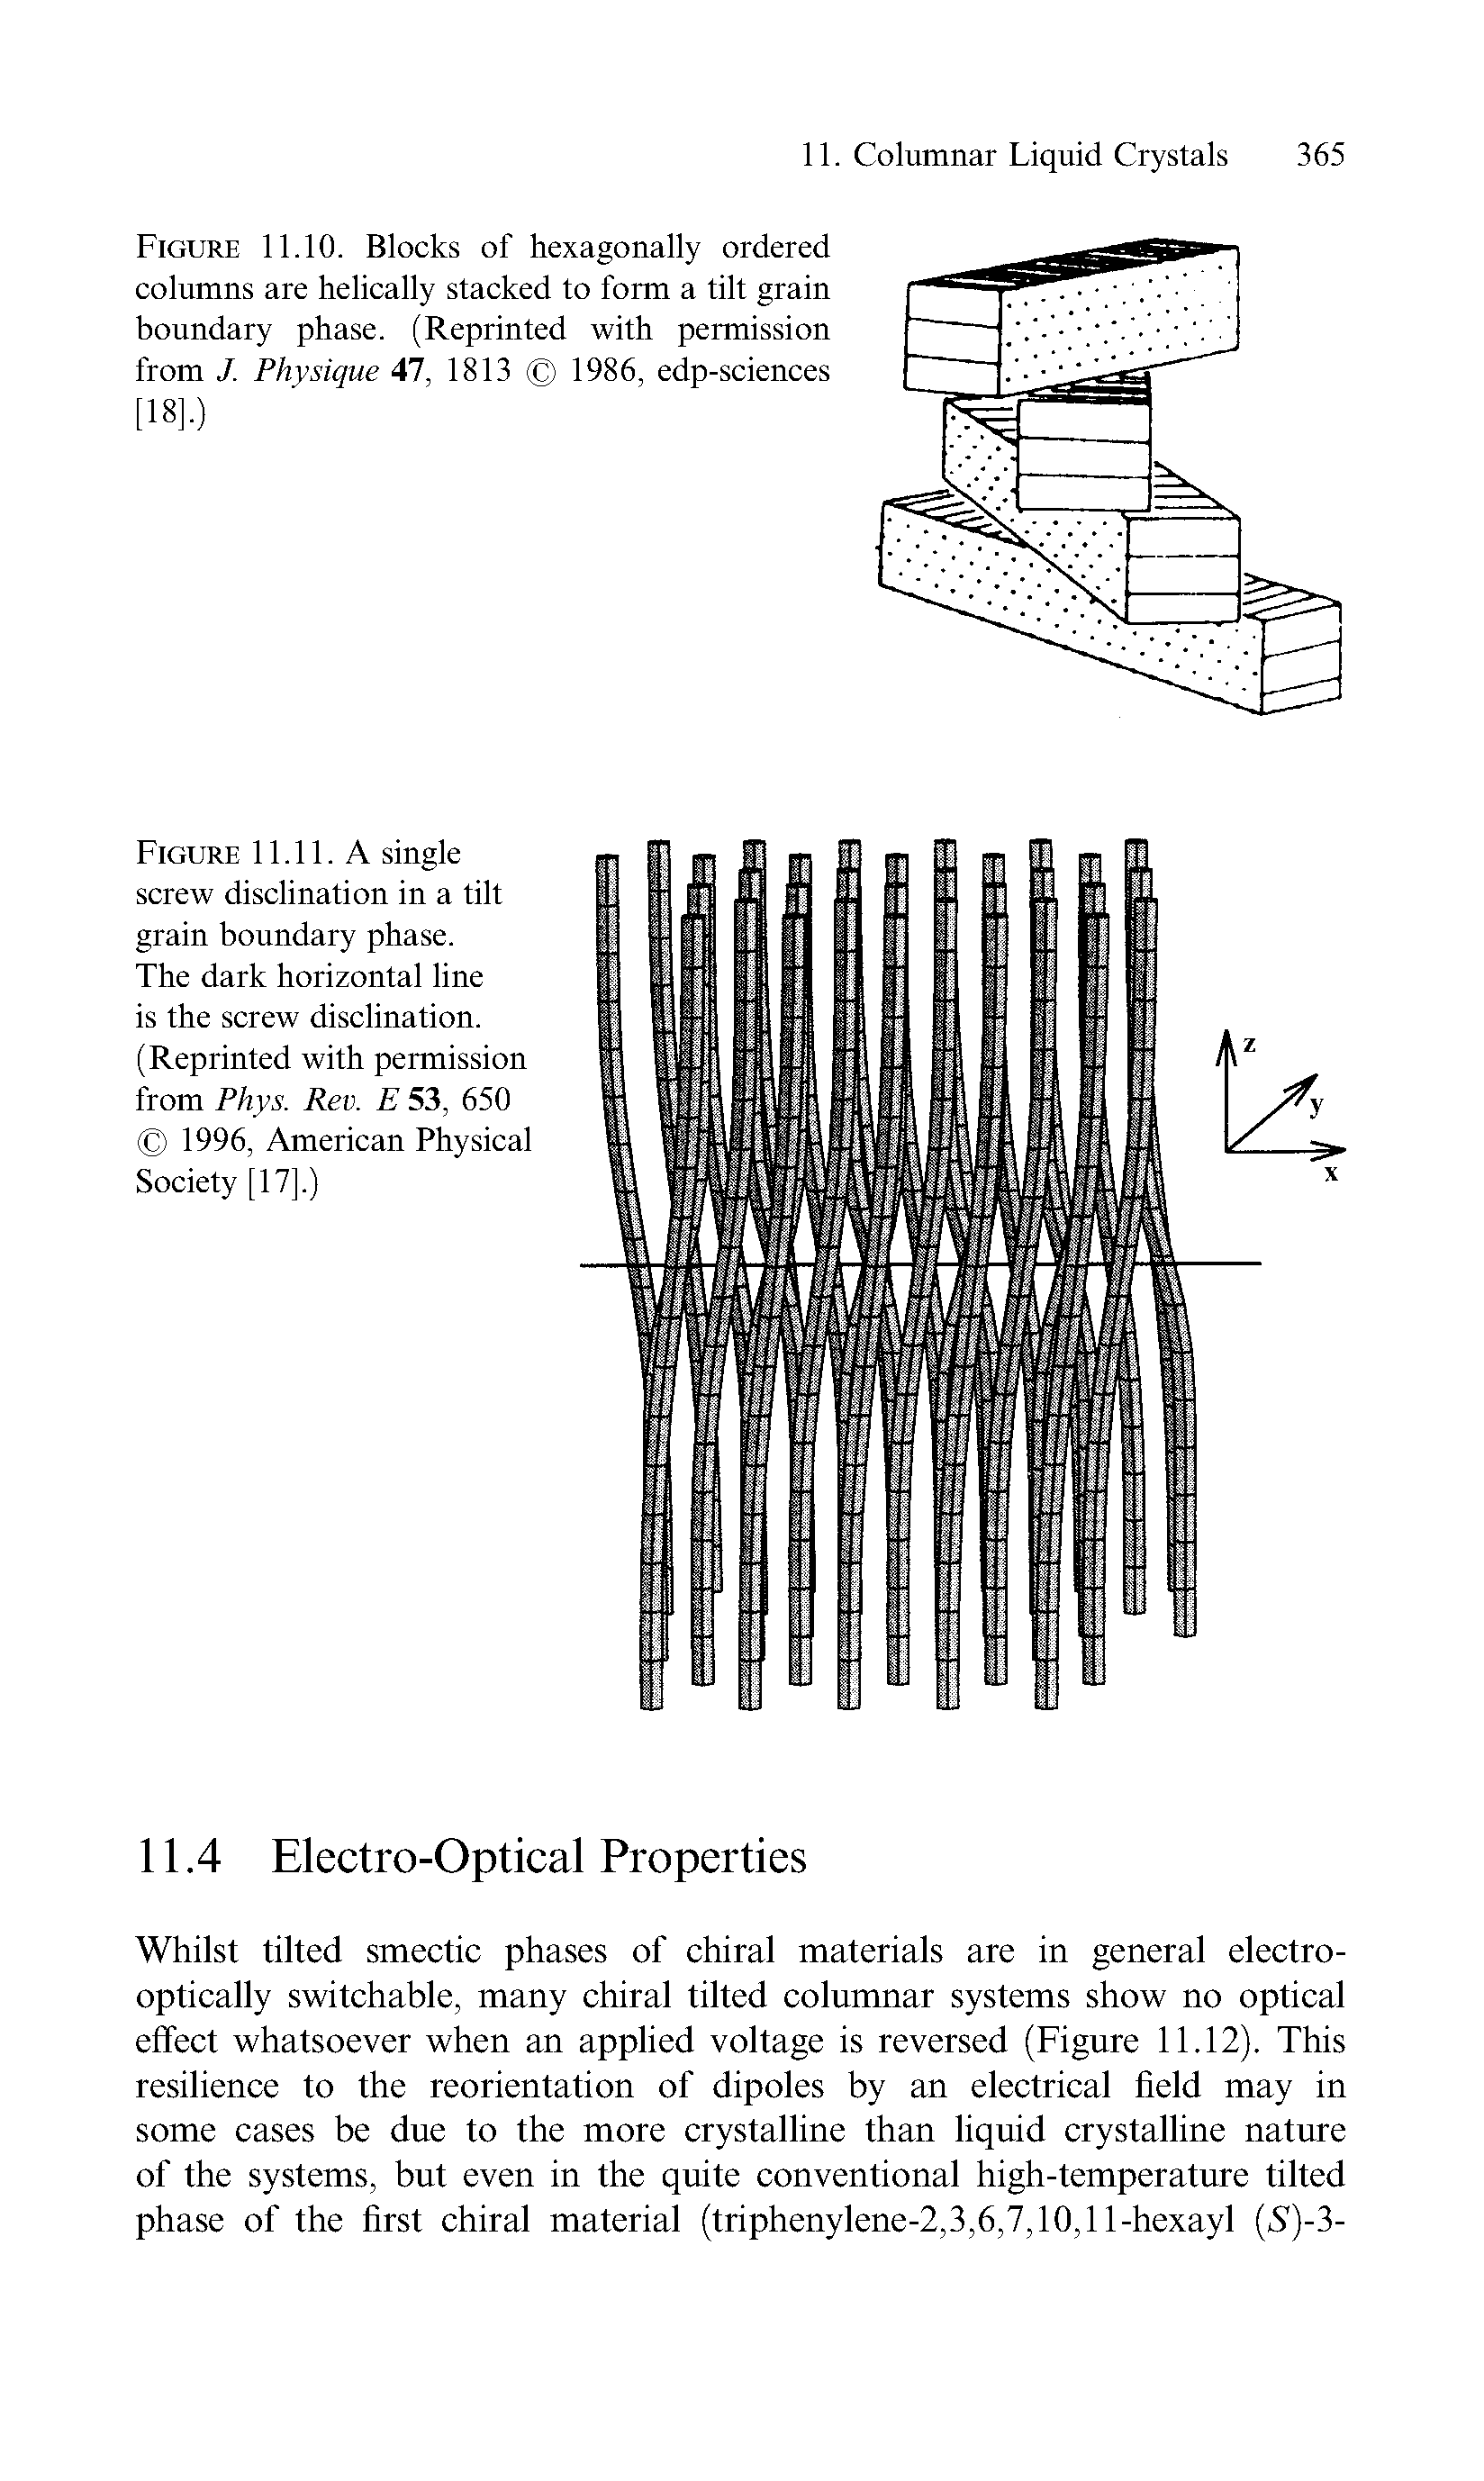 Figure 11.11. A single screw disclination in a tilt grain boundary phase.